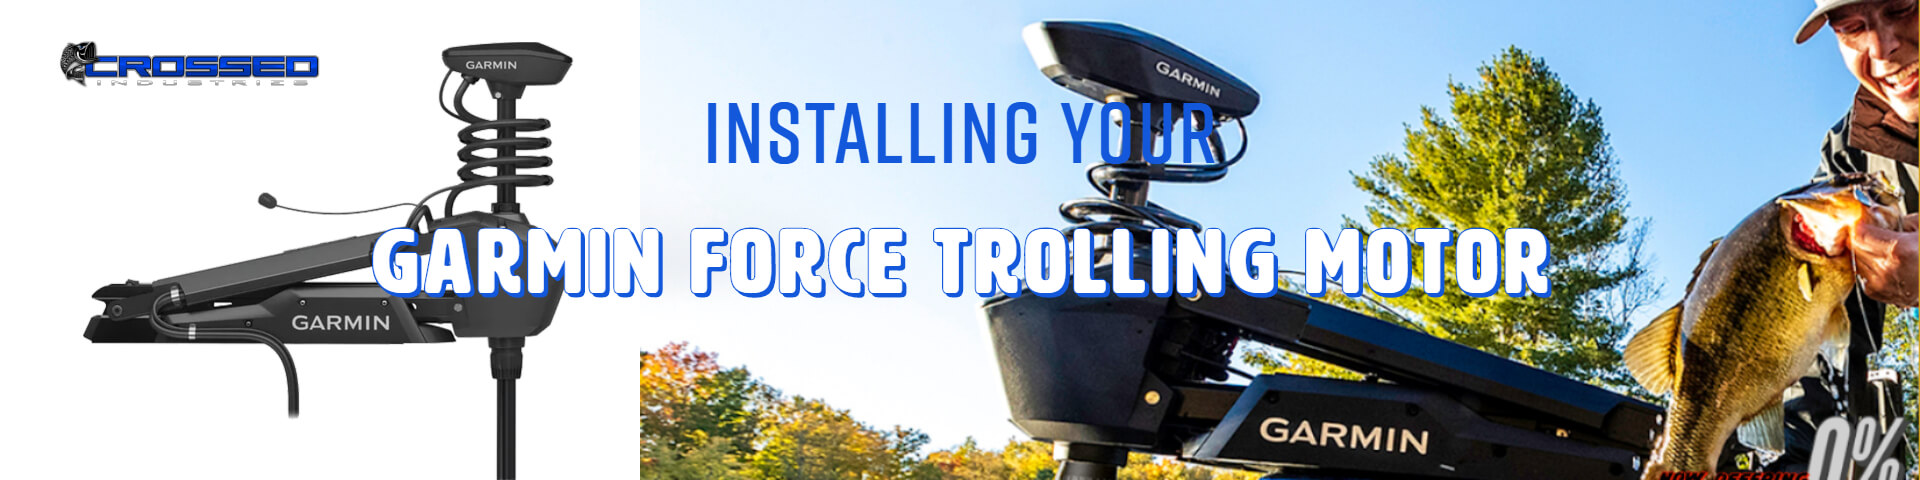 Installing Your New Garmin Force Trolling Motor - Garmin install Banner